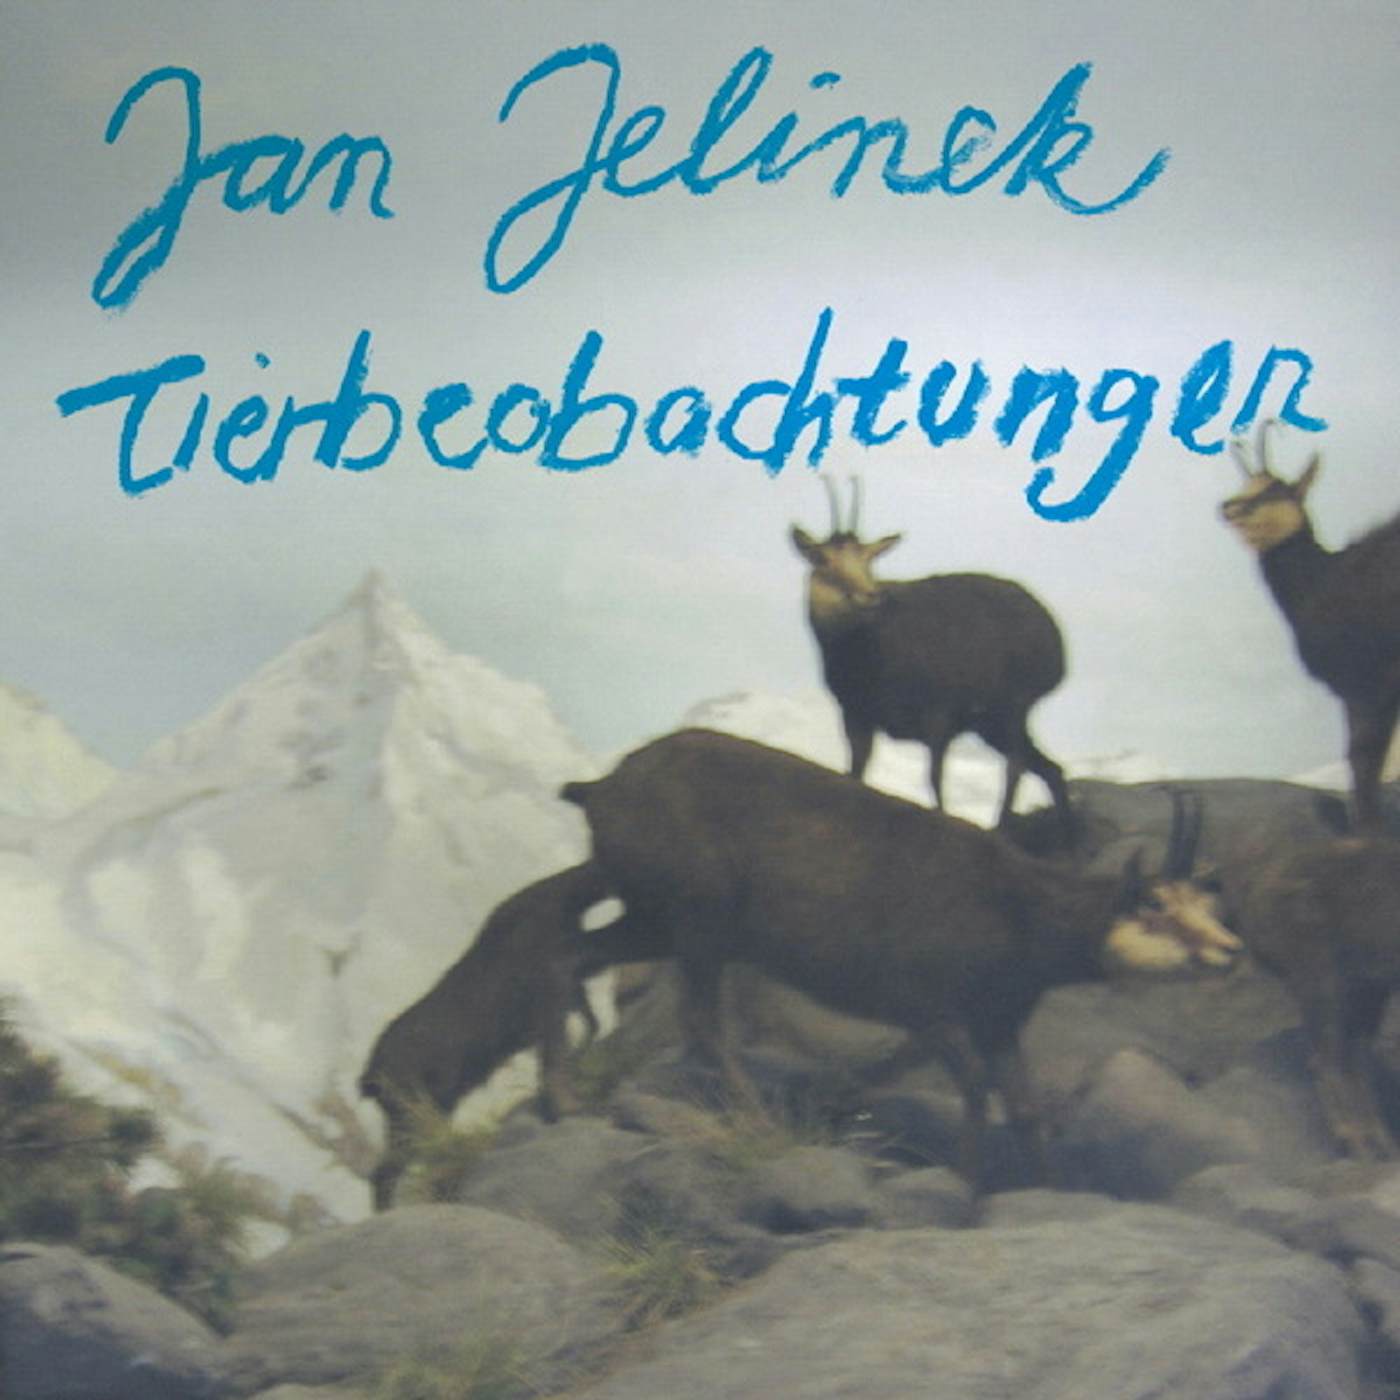 Jan Jelinek Tierbeobachtungen Vinyl Record